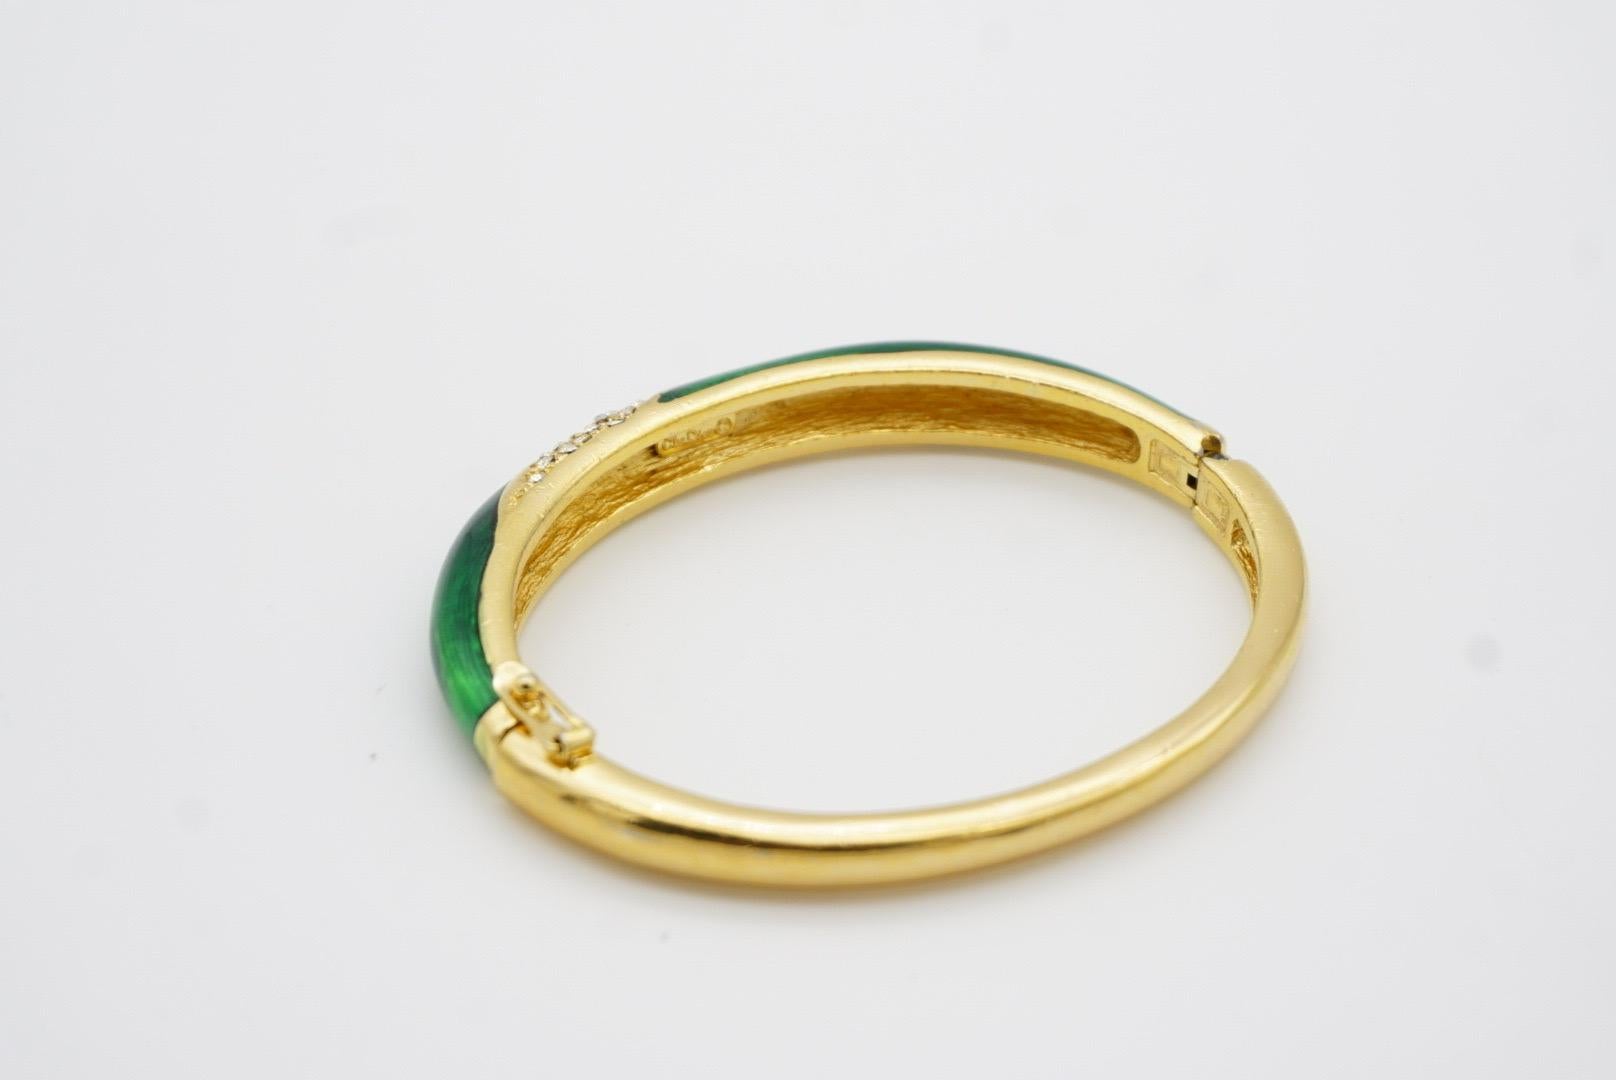 Christian Dior 1980s Vintage Emerald Green Enamel Crystals Cuff Bangle Bracelet For Sale 7